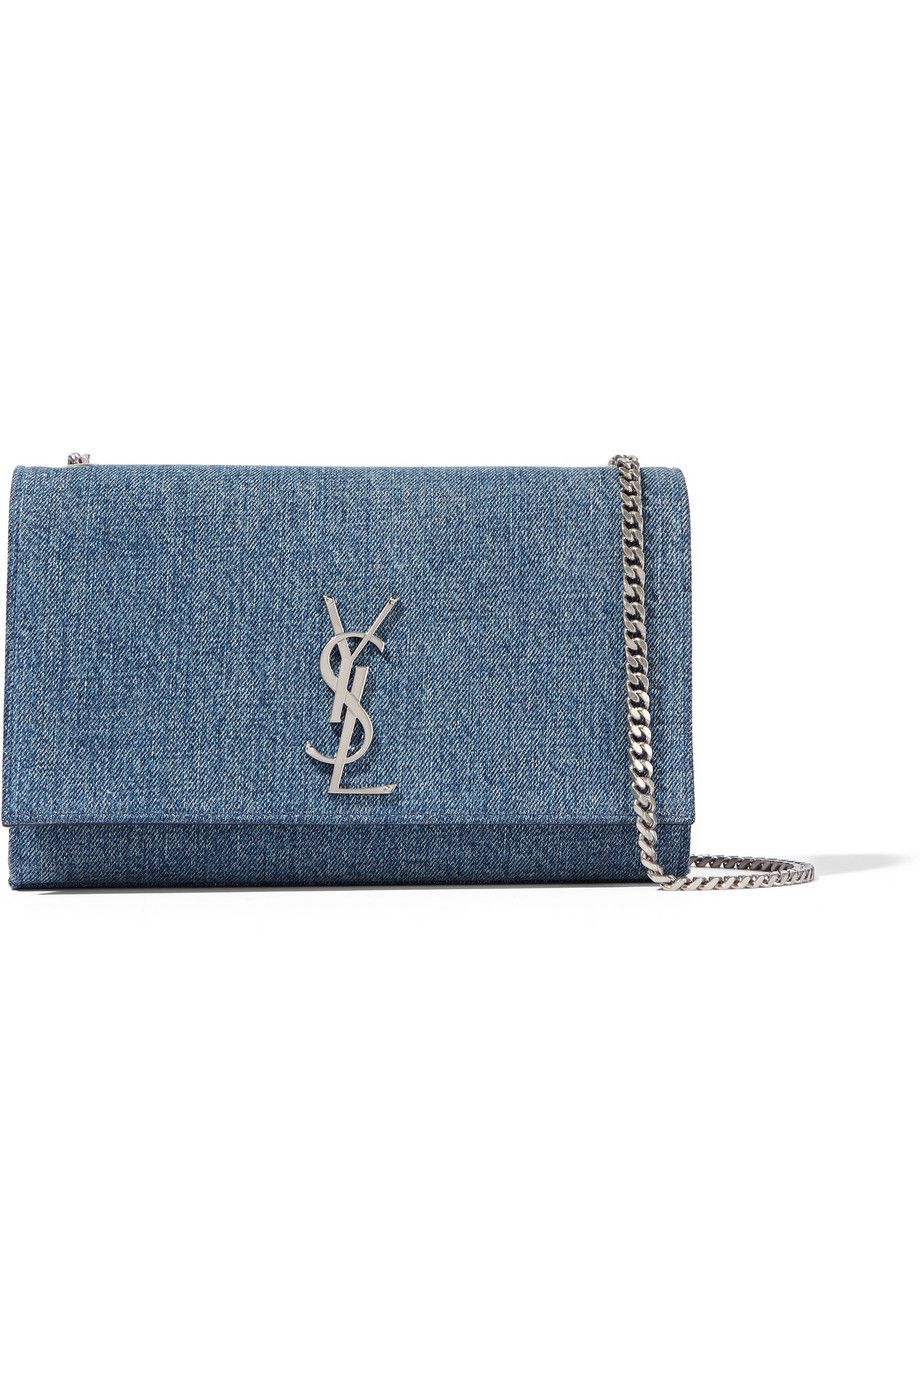 Textile, Wallet, Electric blue, Denim, Rectangle, Leather, Coin purse, Pocket, Symbol, Zipper, 